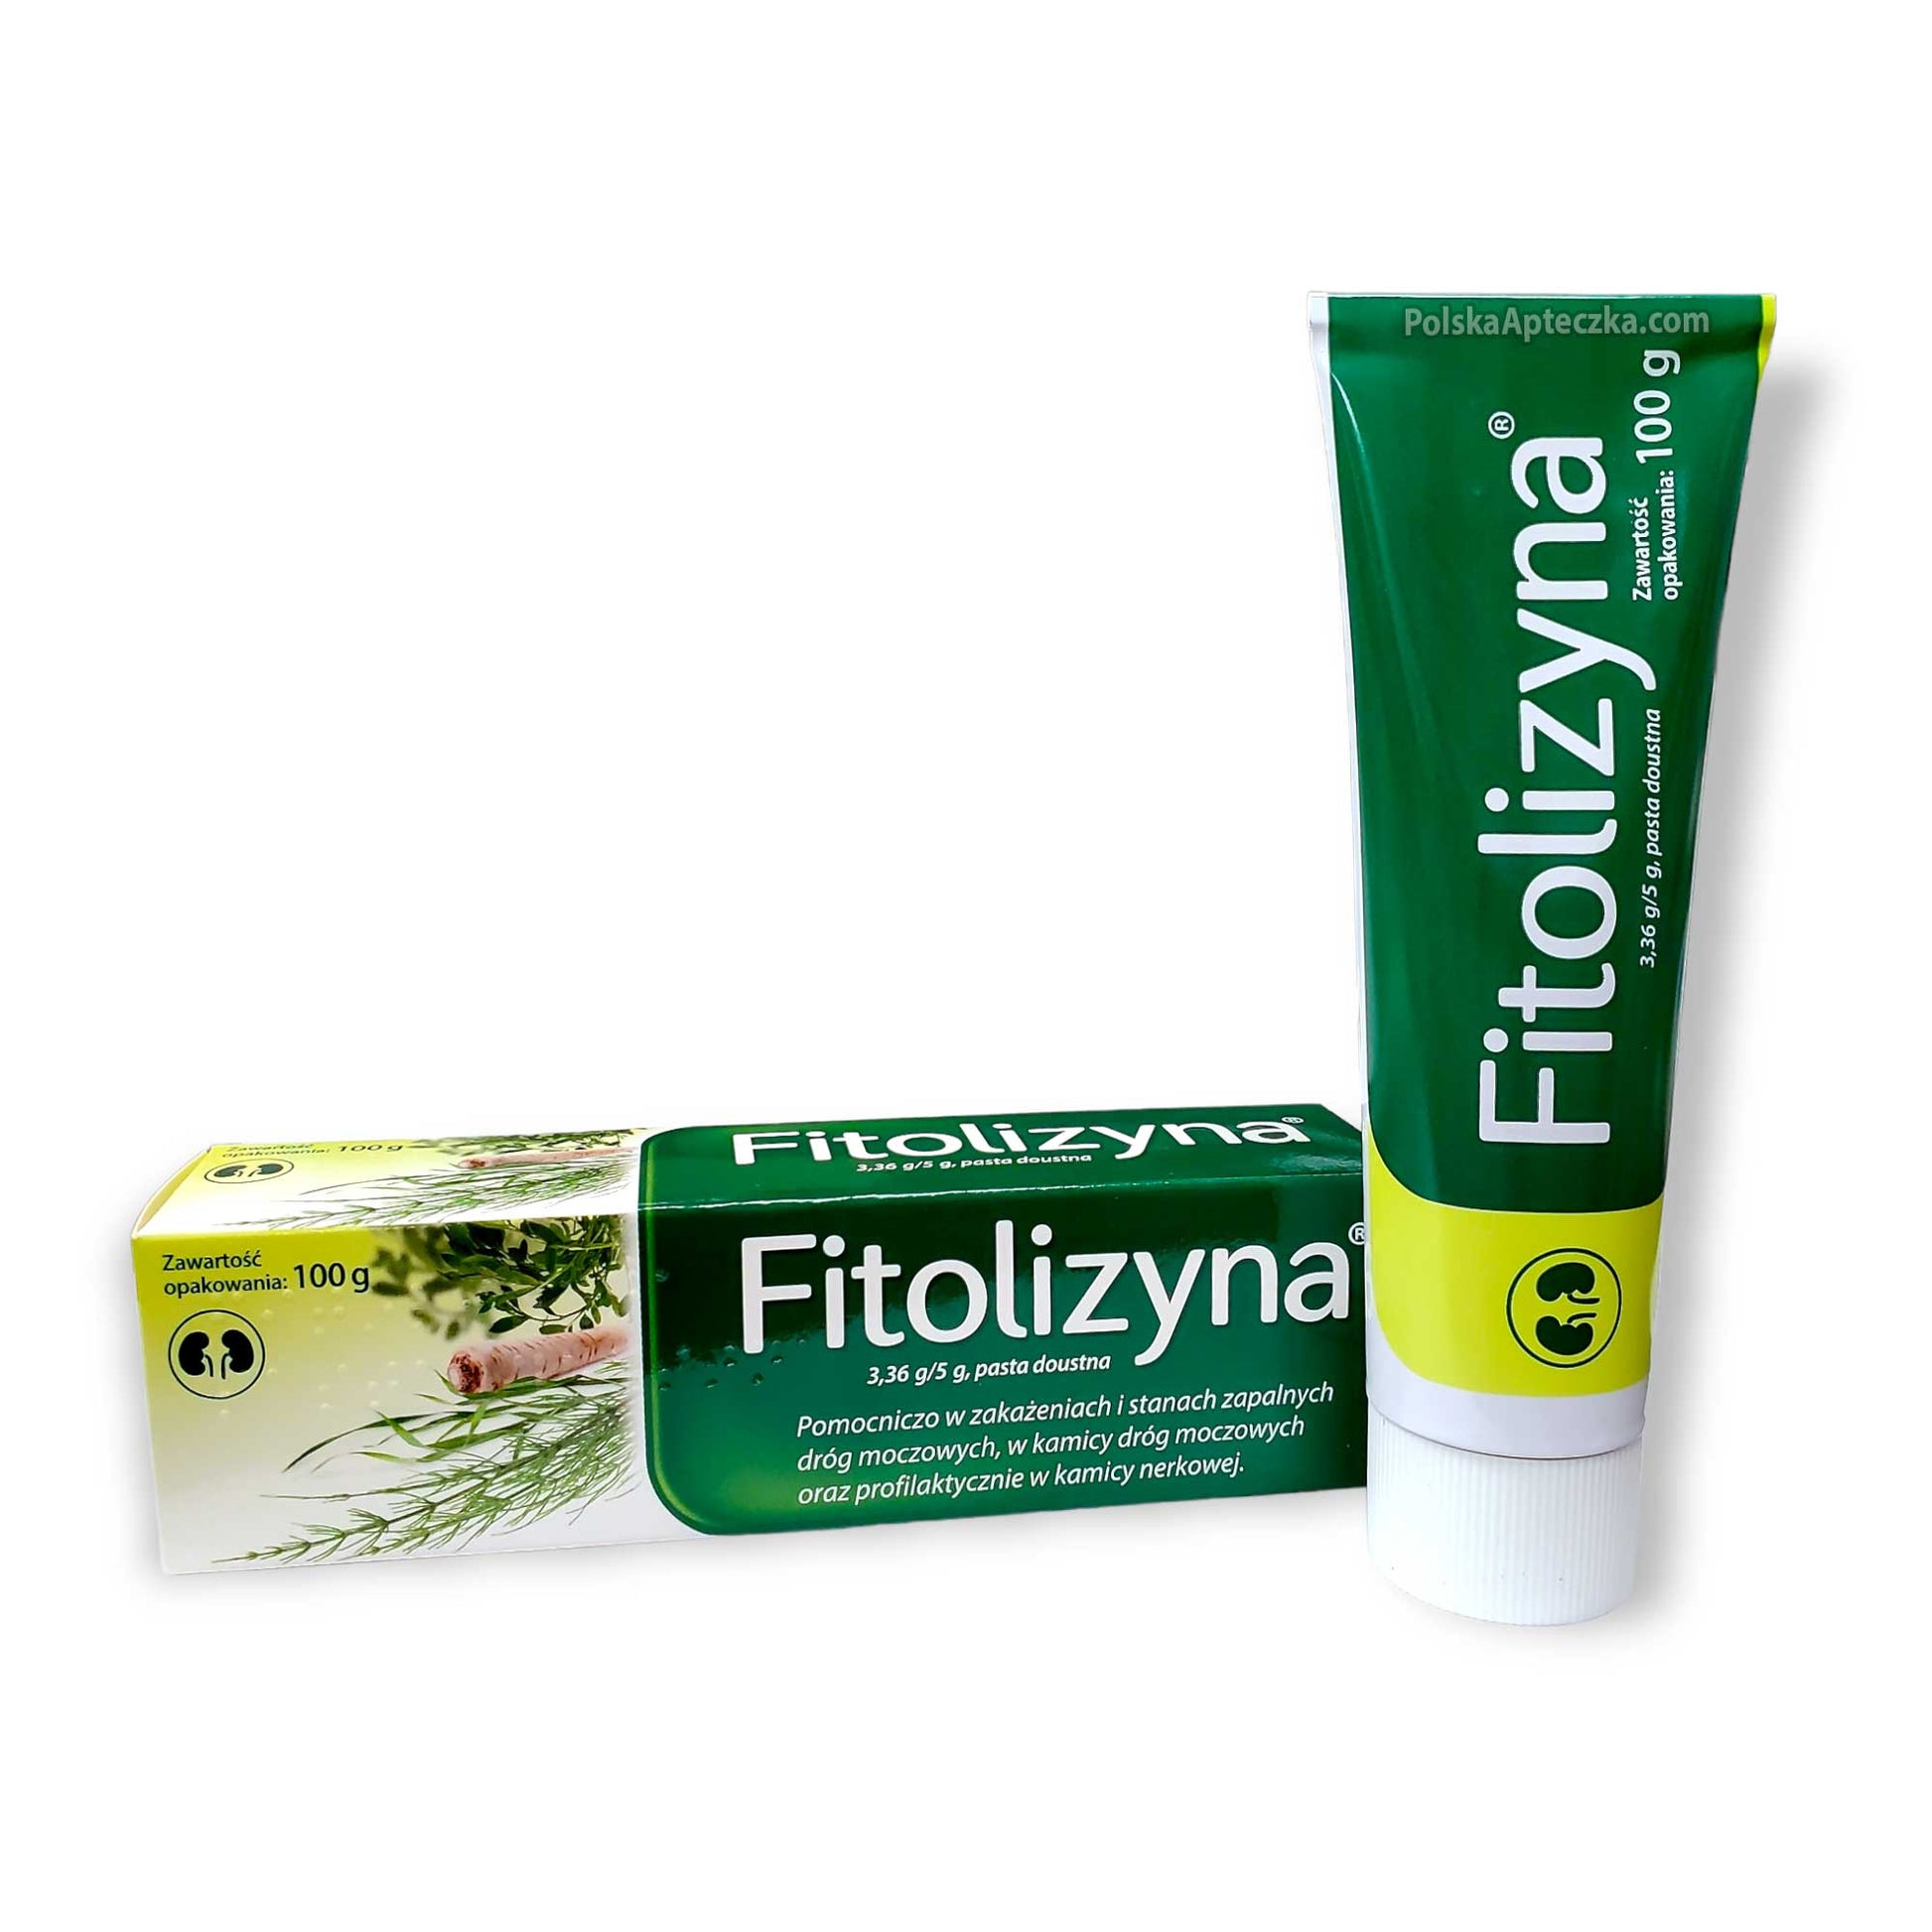 Fitolizyna oral paste, 100g, Herbapol | Chicago, USA – APTECZKA | Proton  Nutrition